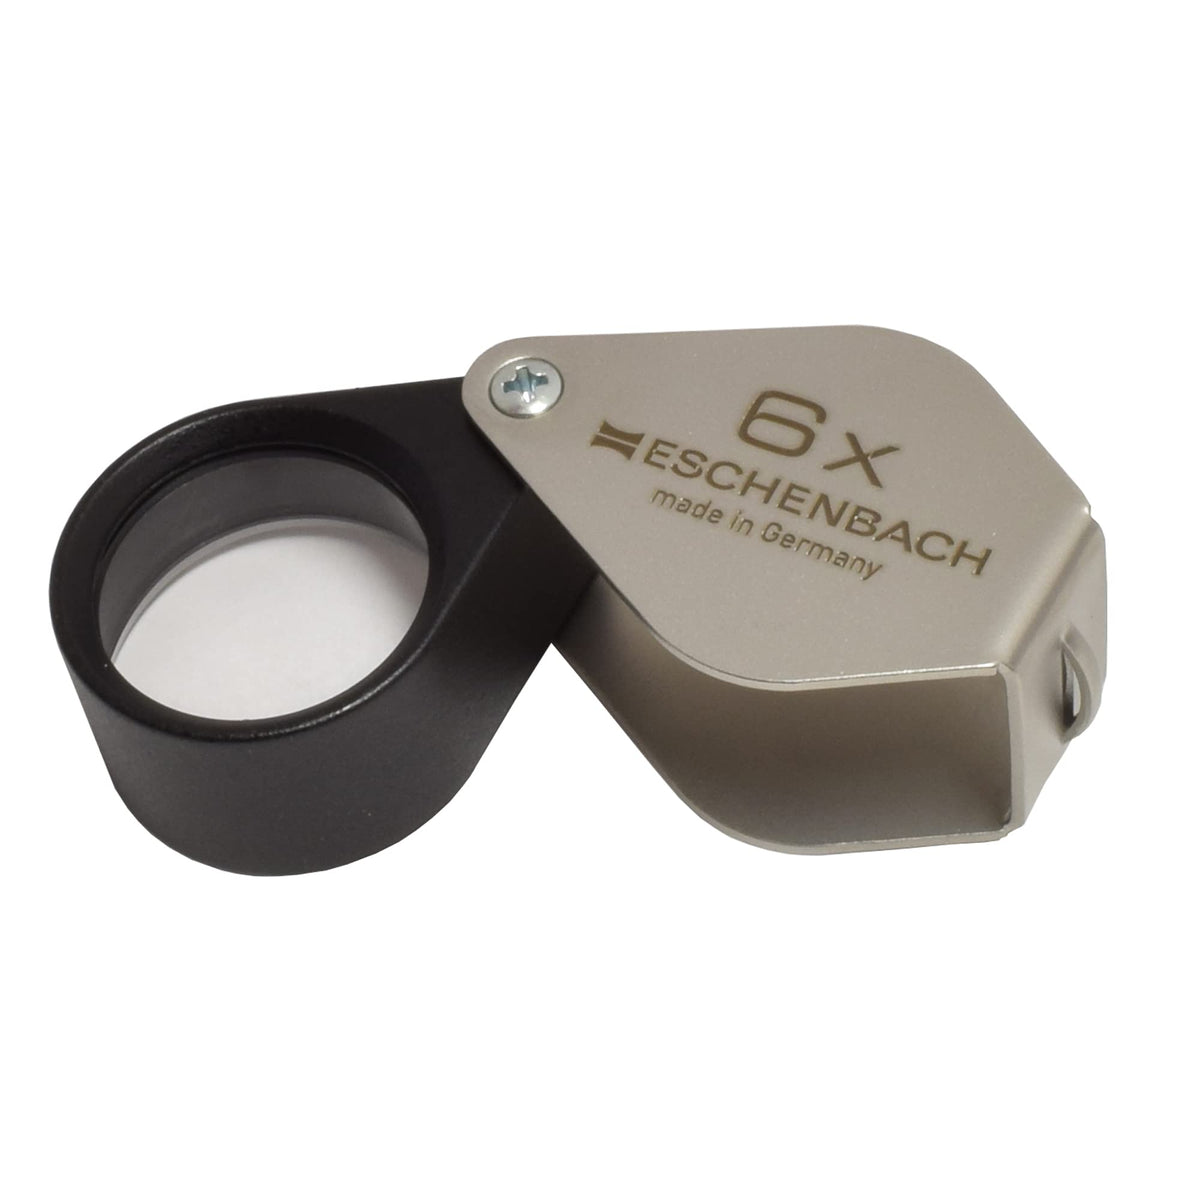 Eschenbach 10x Loupe for Inspection Folding Plastic Magnifier 1182-10